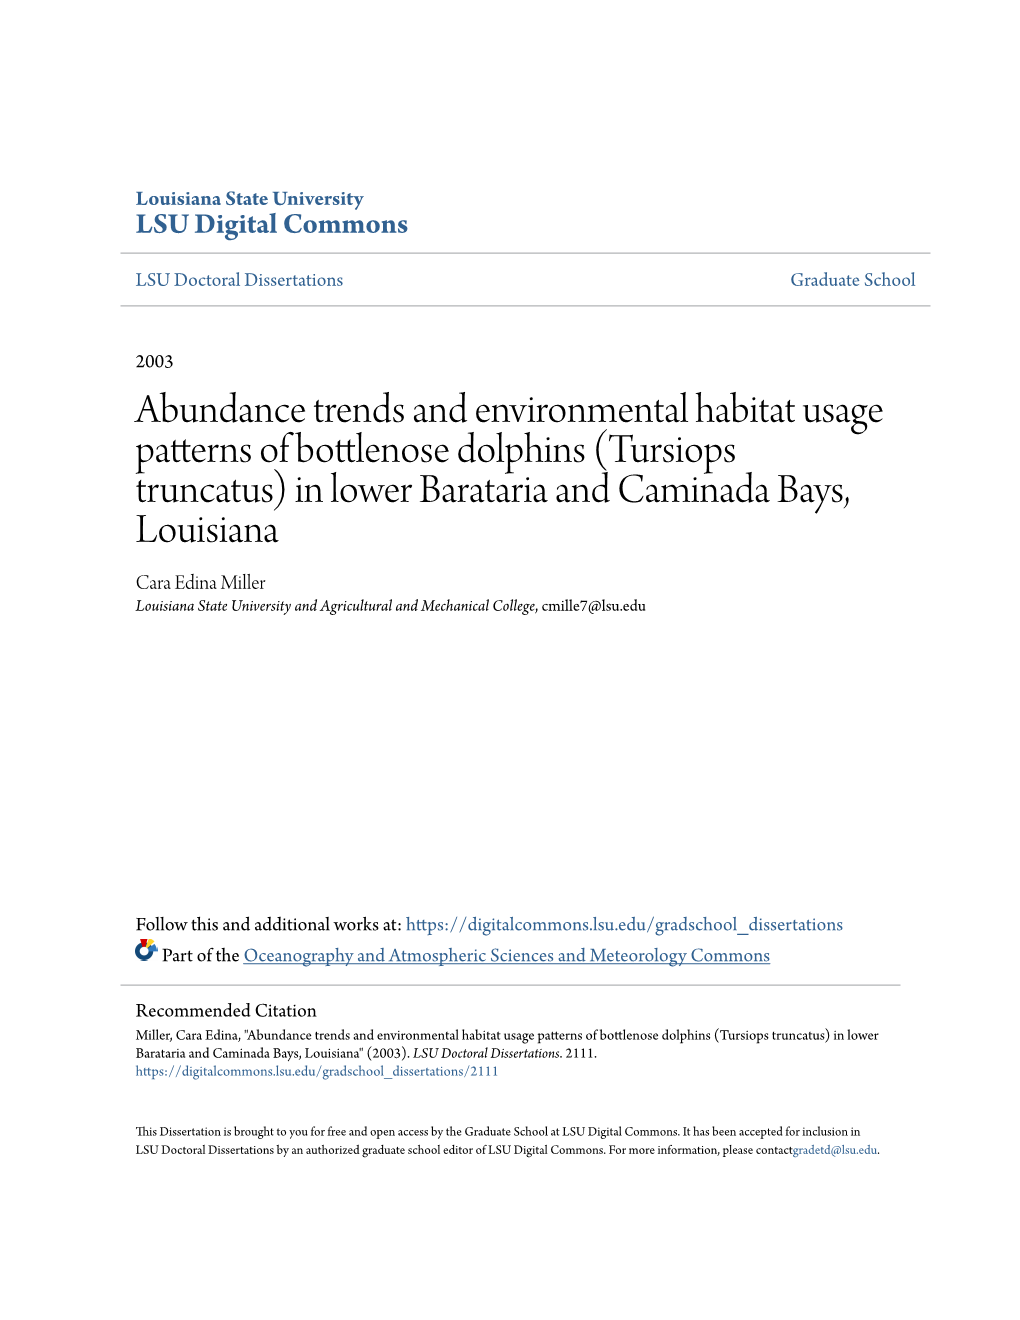 Abundance Trends and Environmental Habitat Usage Patterns of Bottlenose